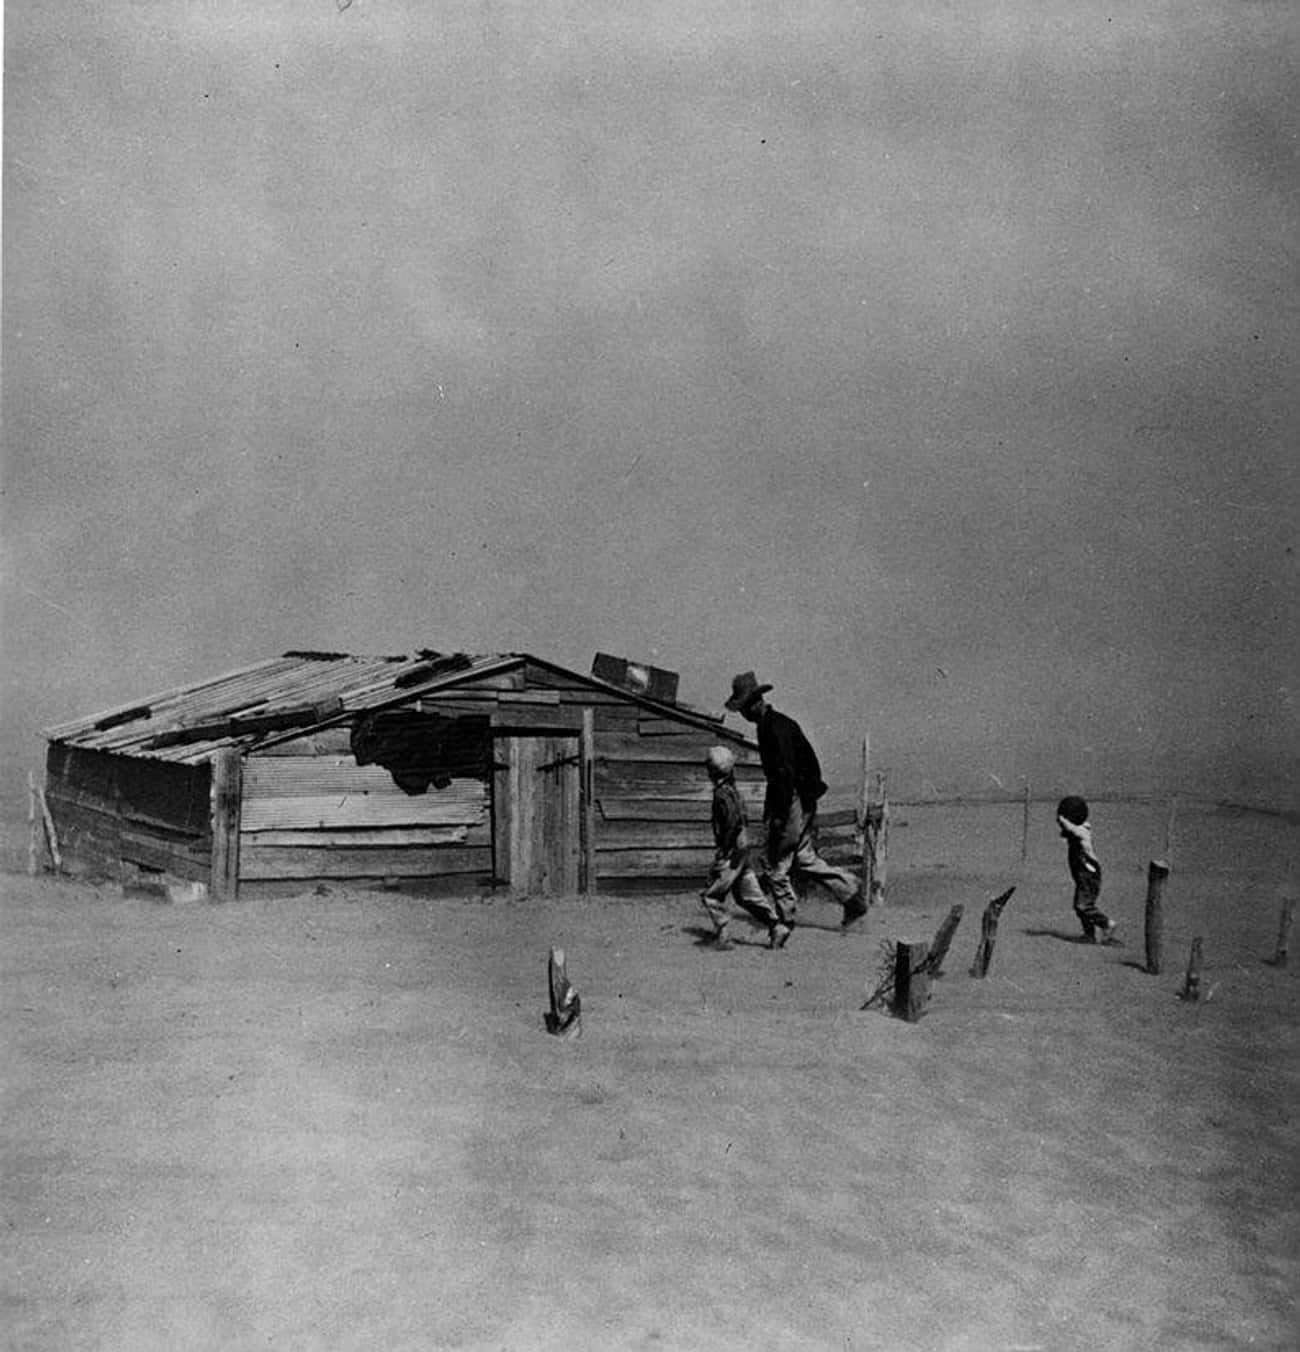 A Farmer And His Family Trudging Through A Storm, Oklahoma, 1936